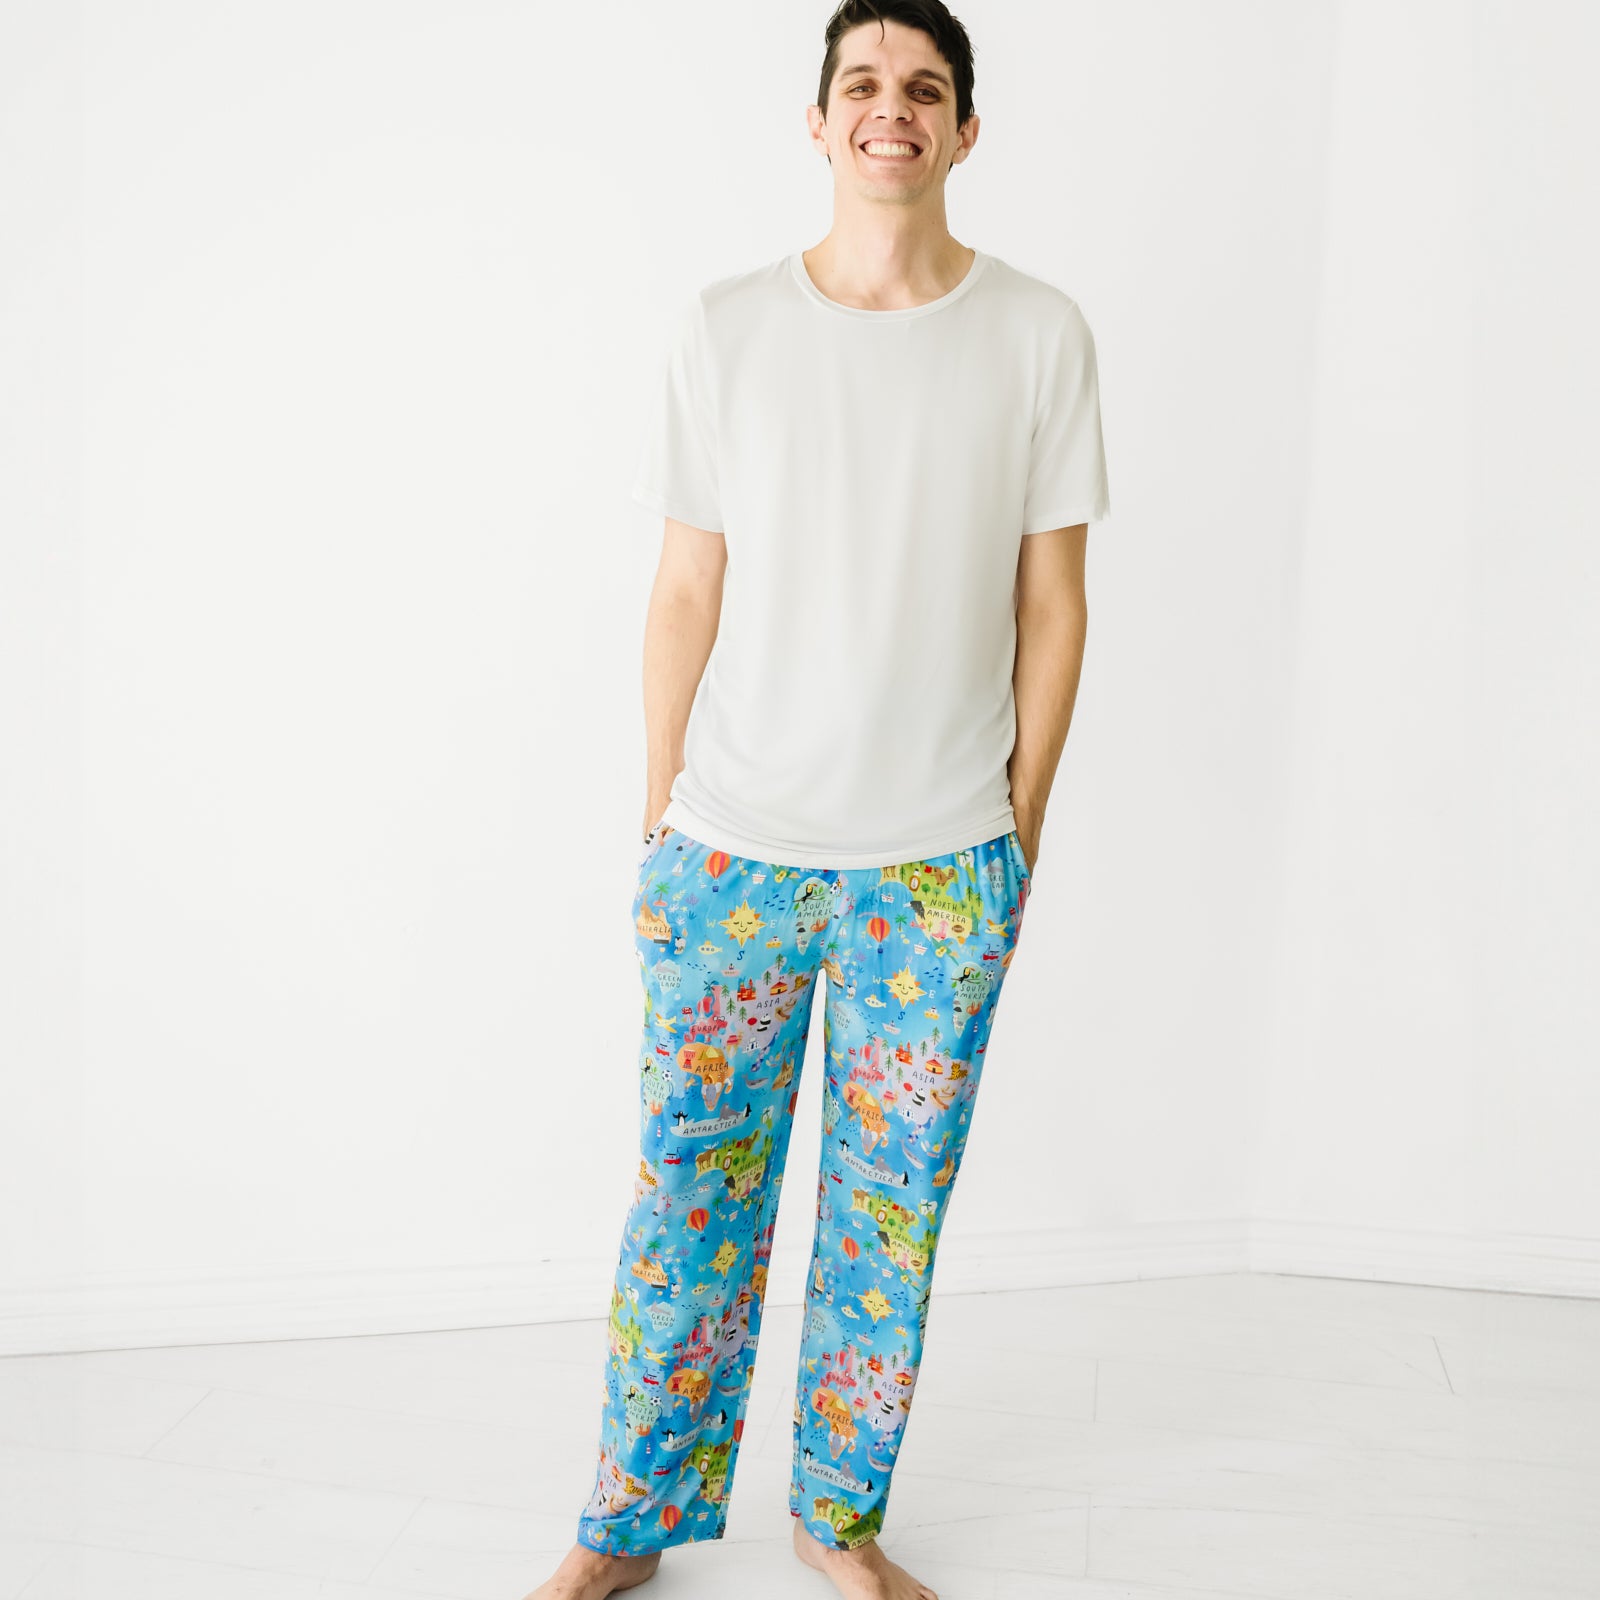 Man wearing a Bright White Men's Short Sleeve Pajama Top and coordinating Around The World printed men's pajama pants